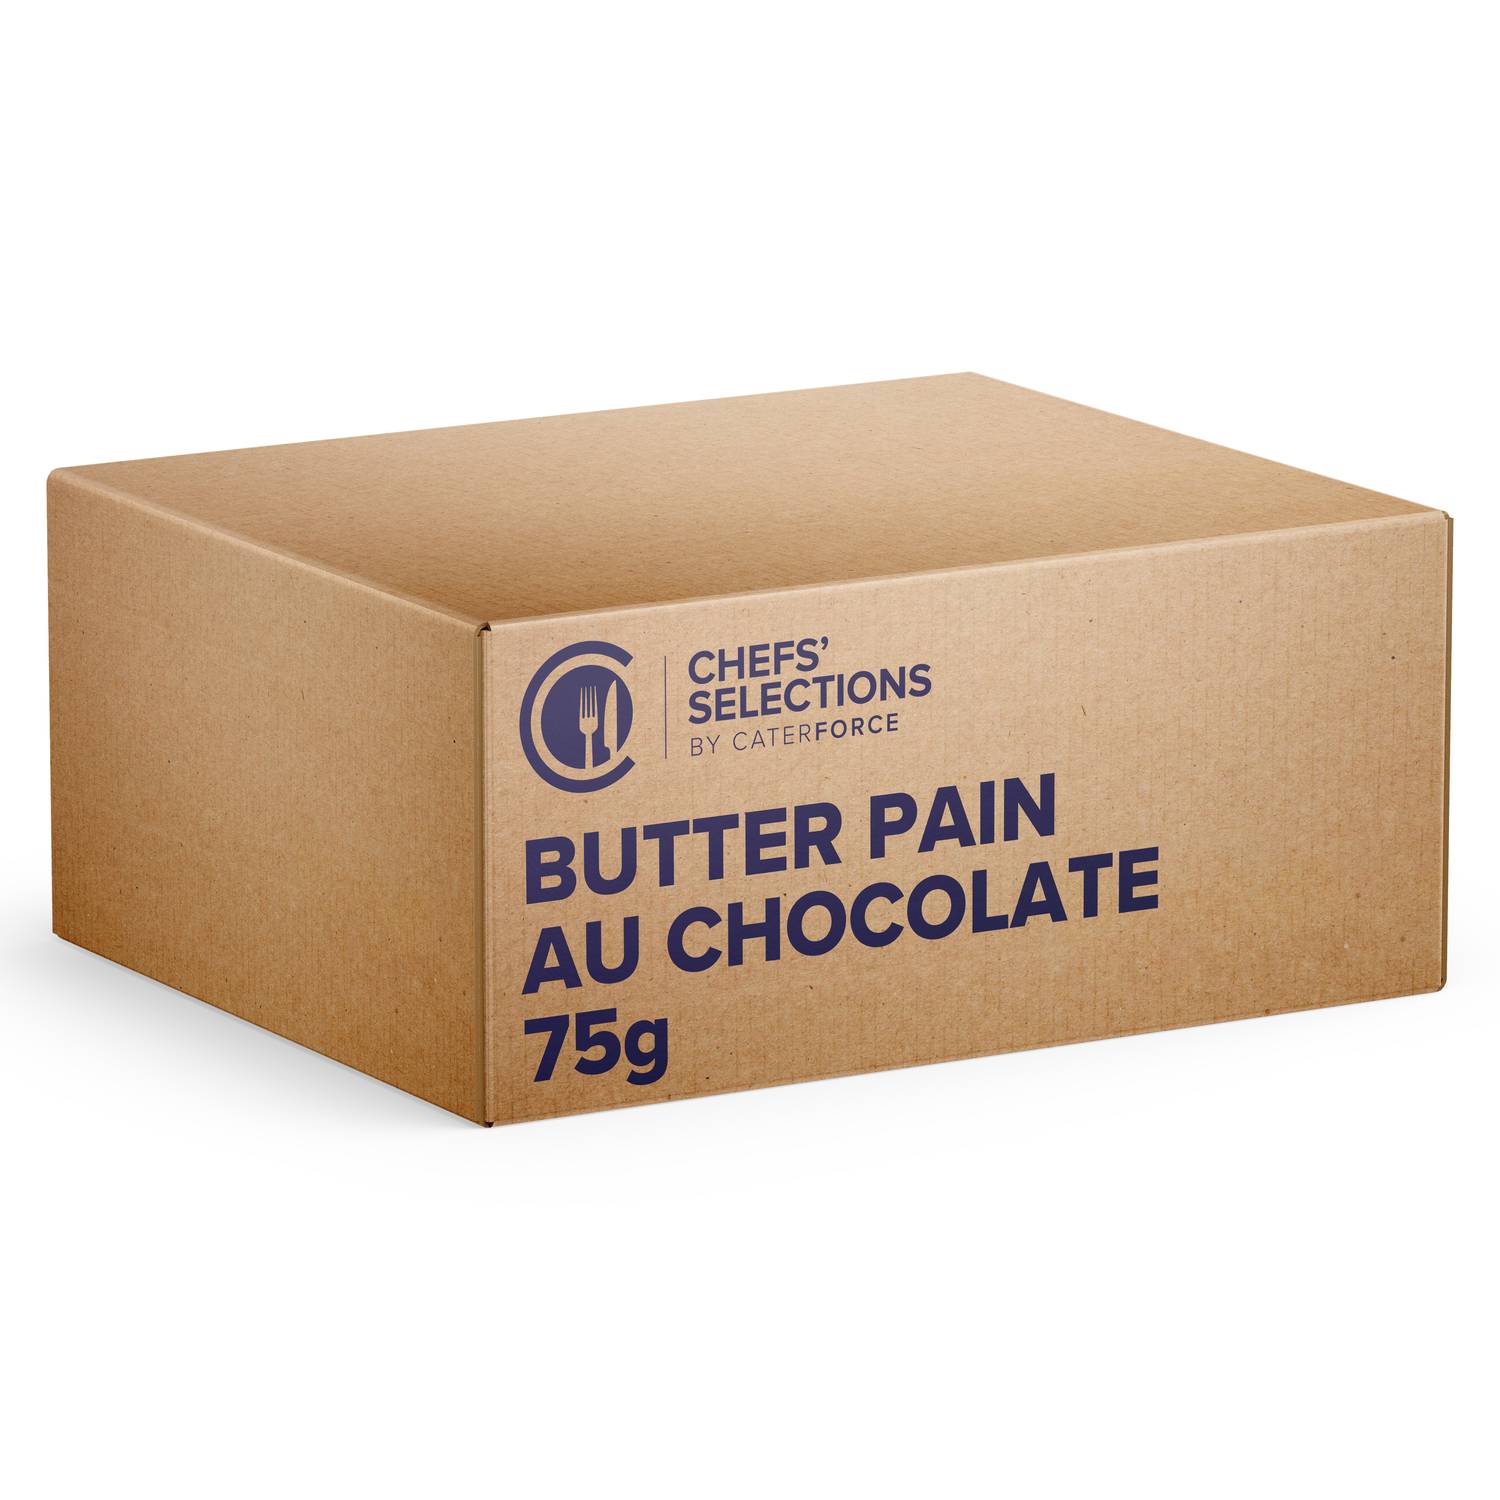 Chefs’ Selections Butter Pain Au Chocolat (60 x 75g)